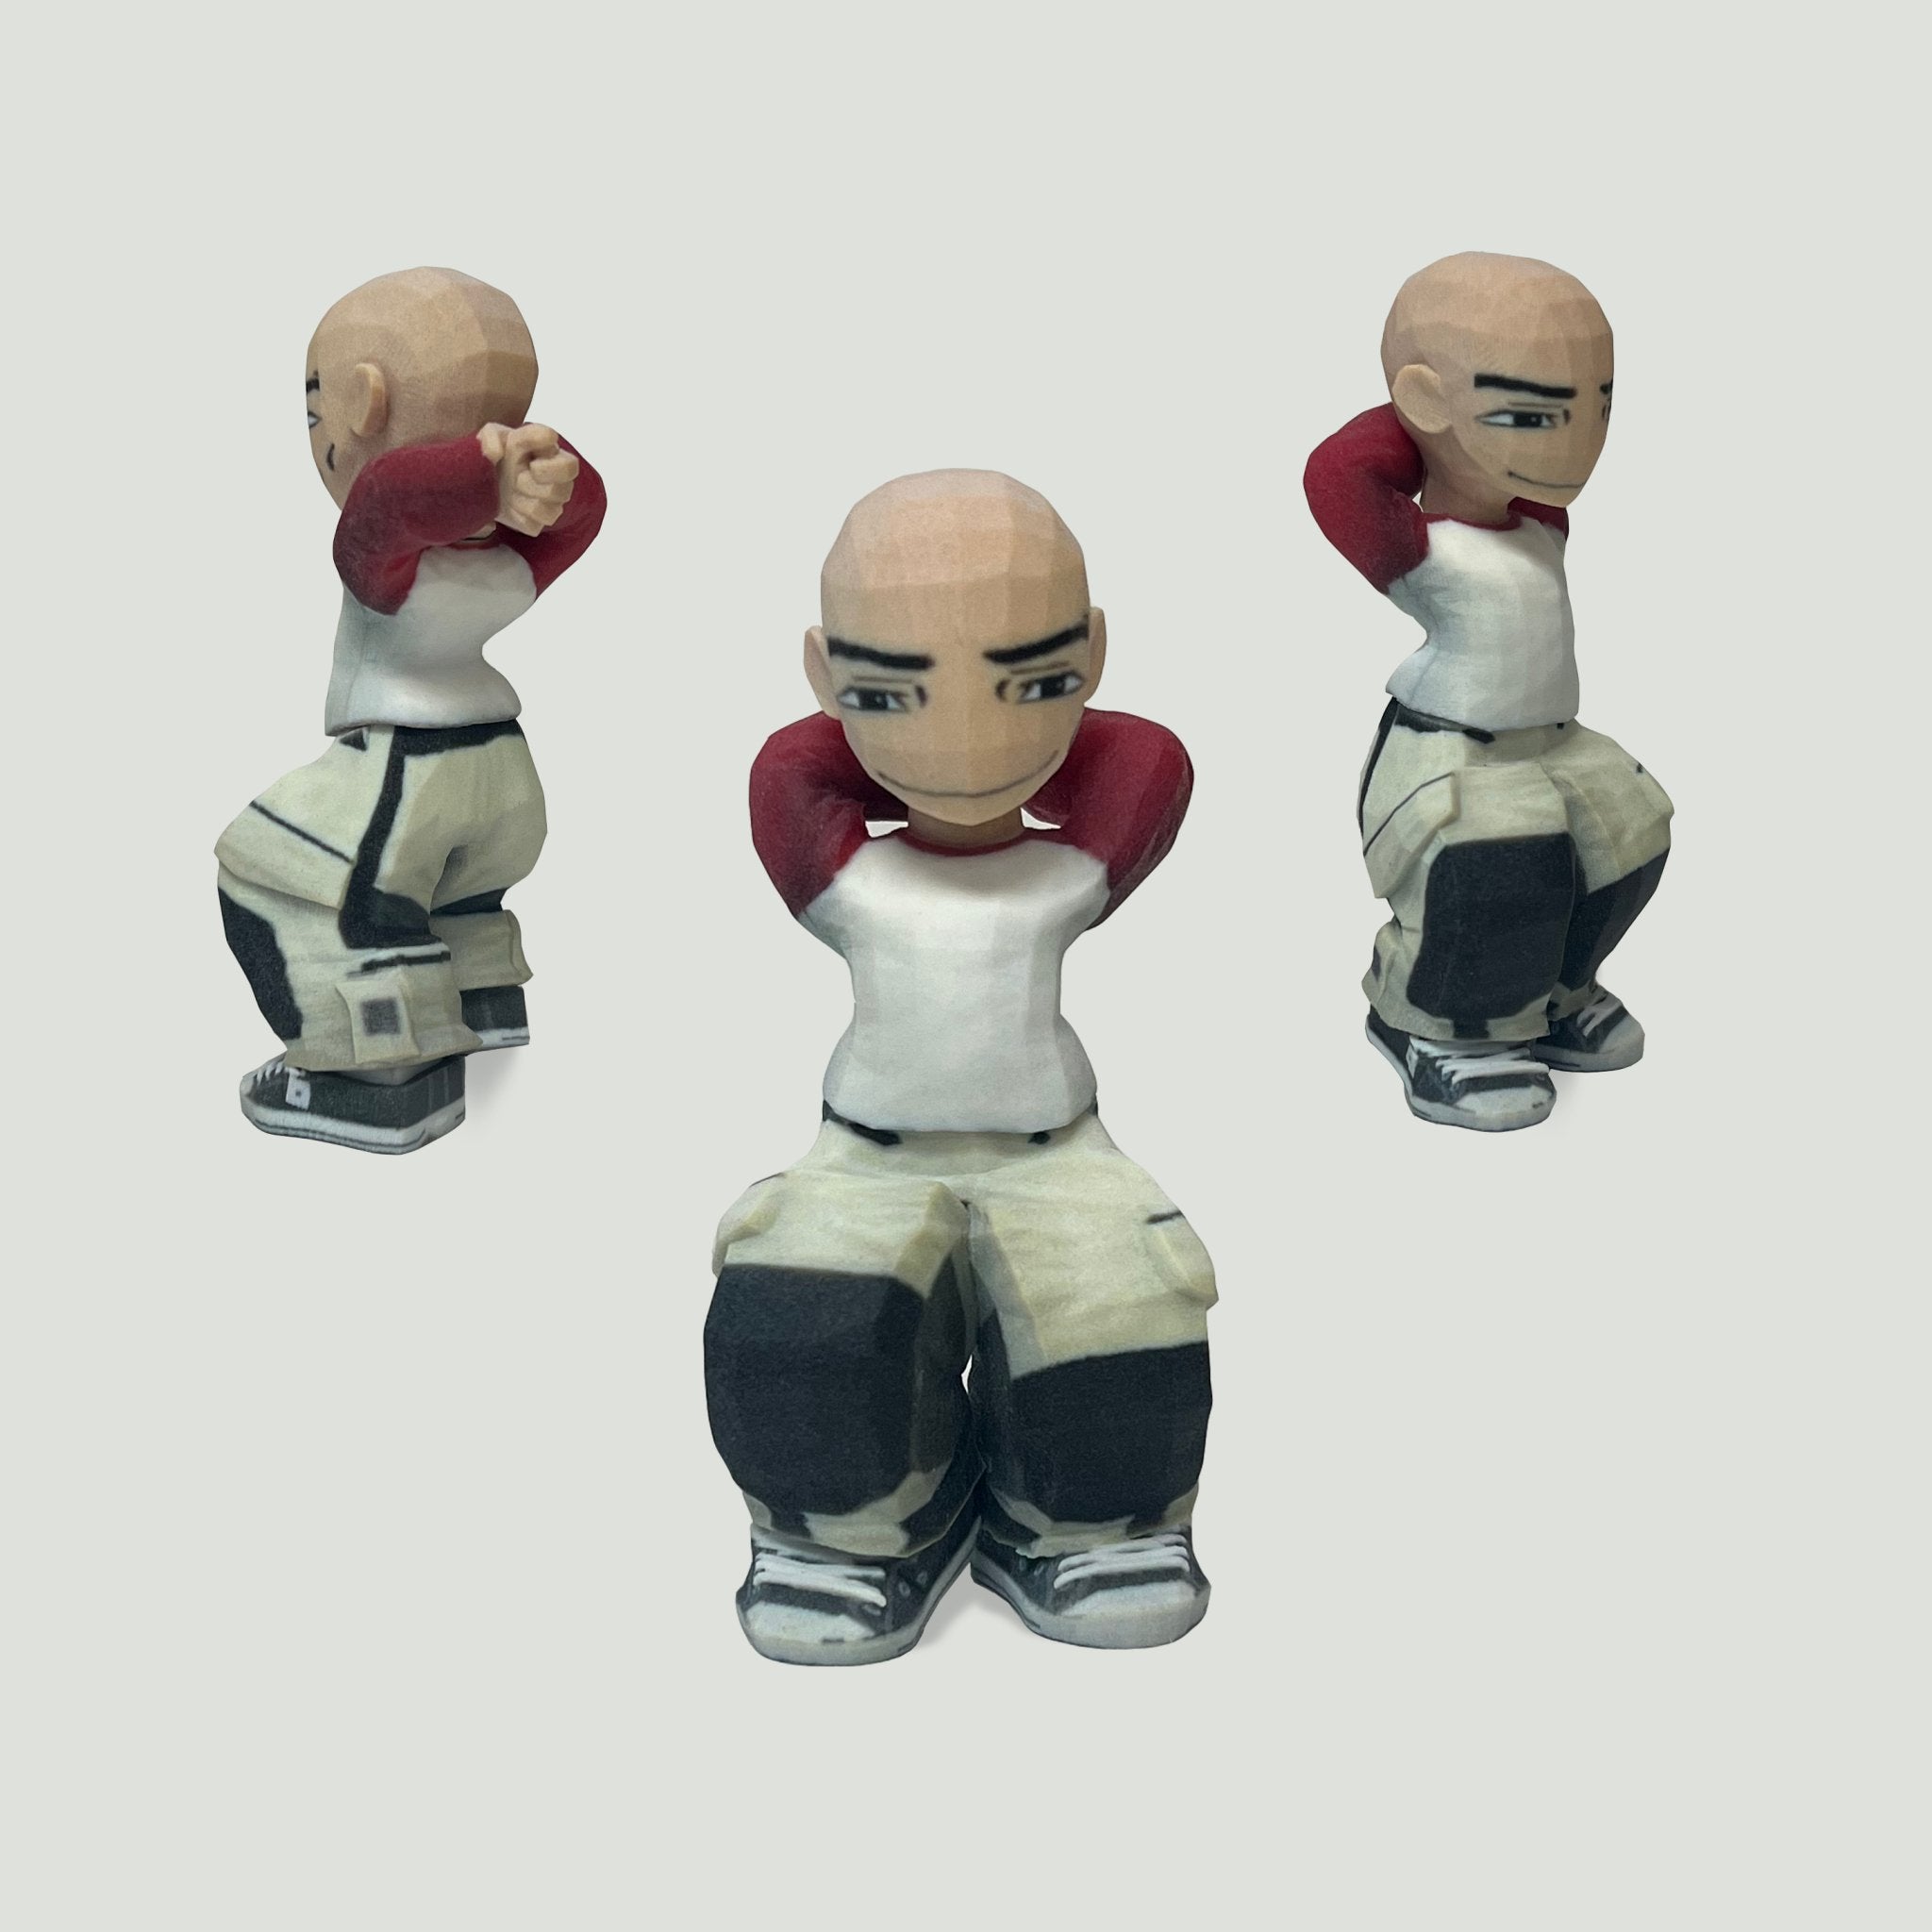 Dancing Egg Avatar custom roblox figure toy figurine figure factories